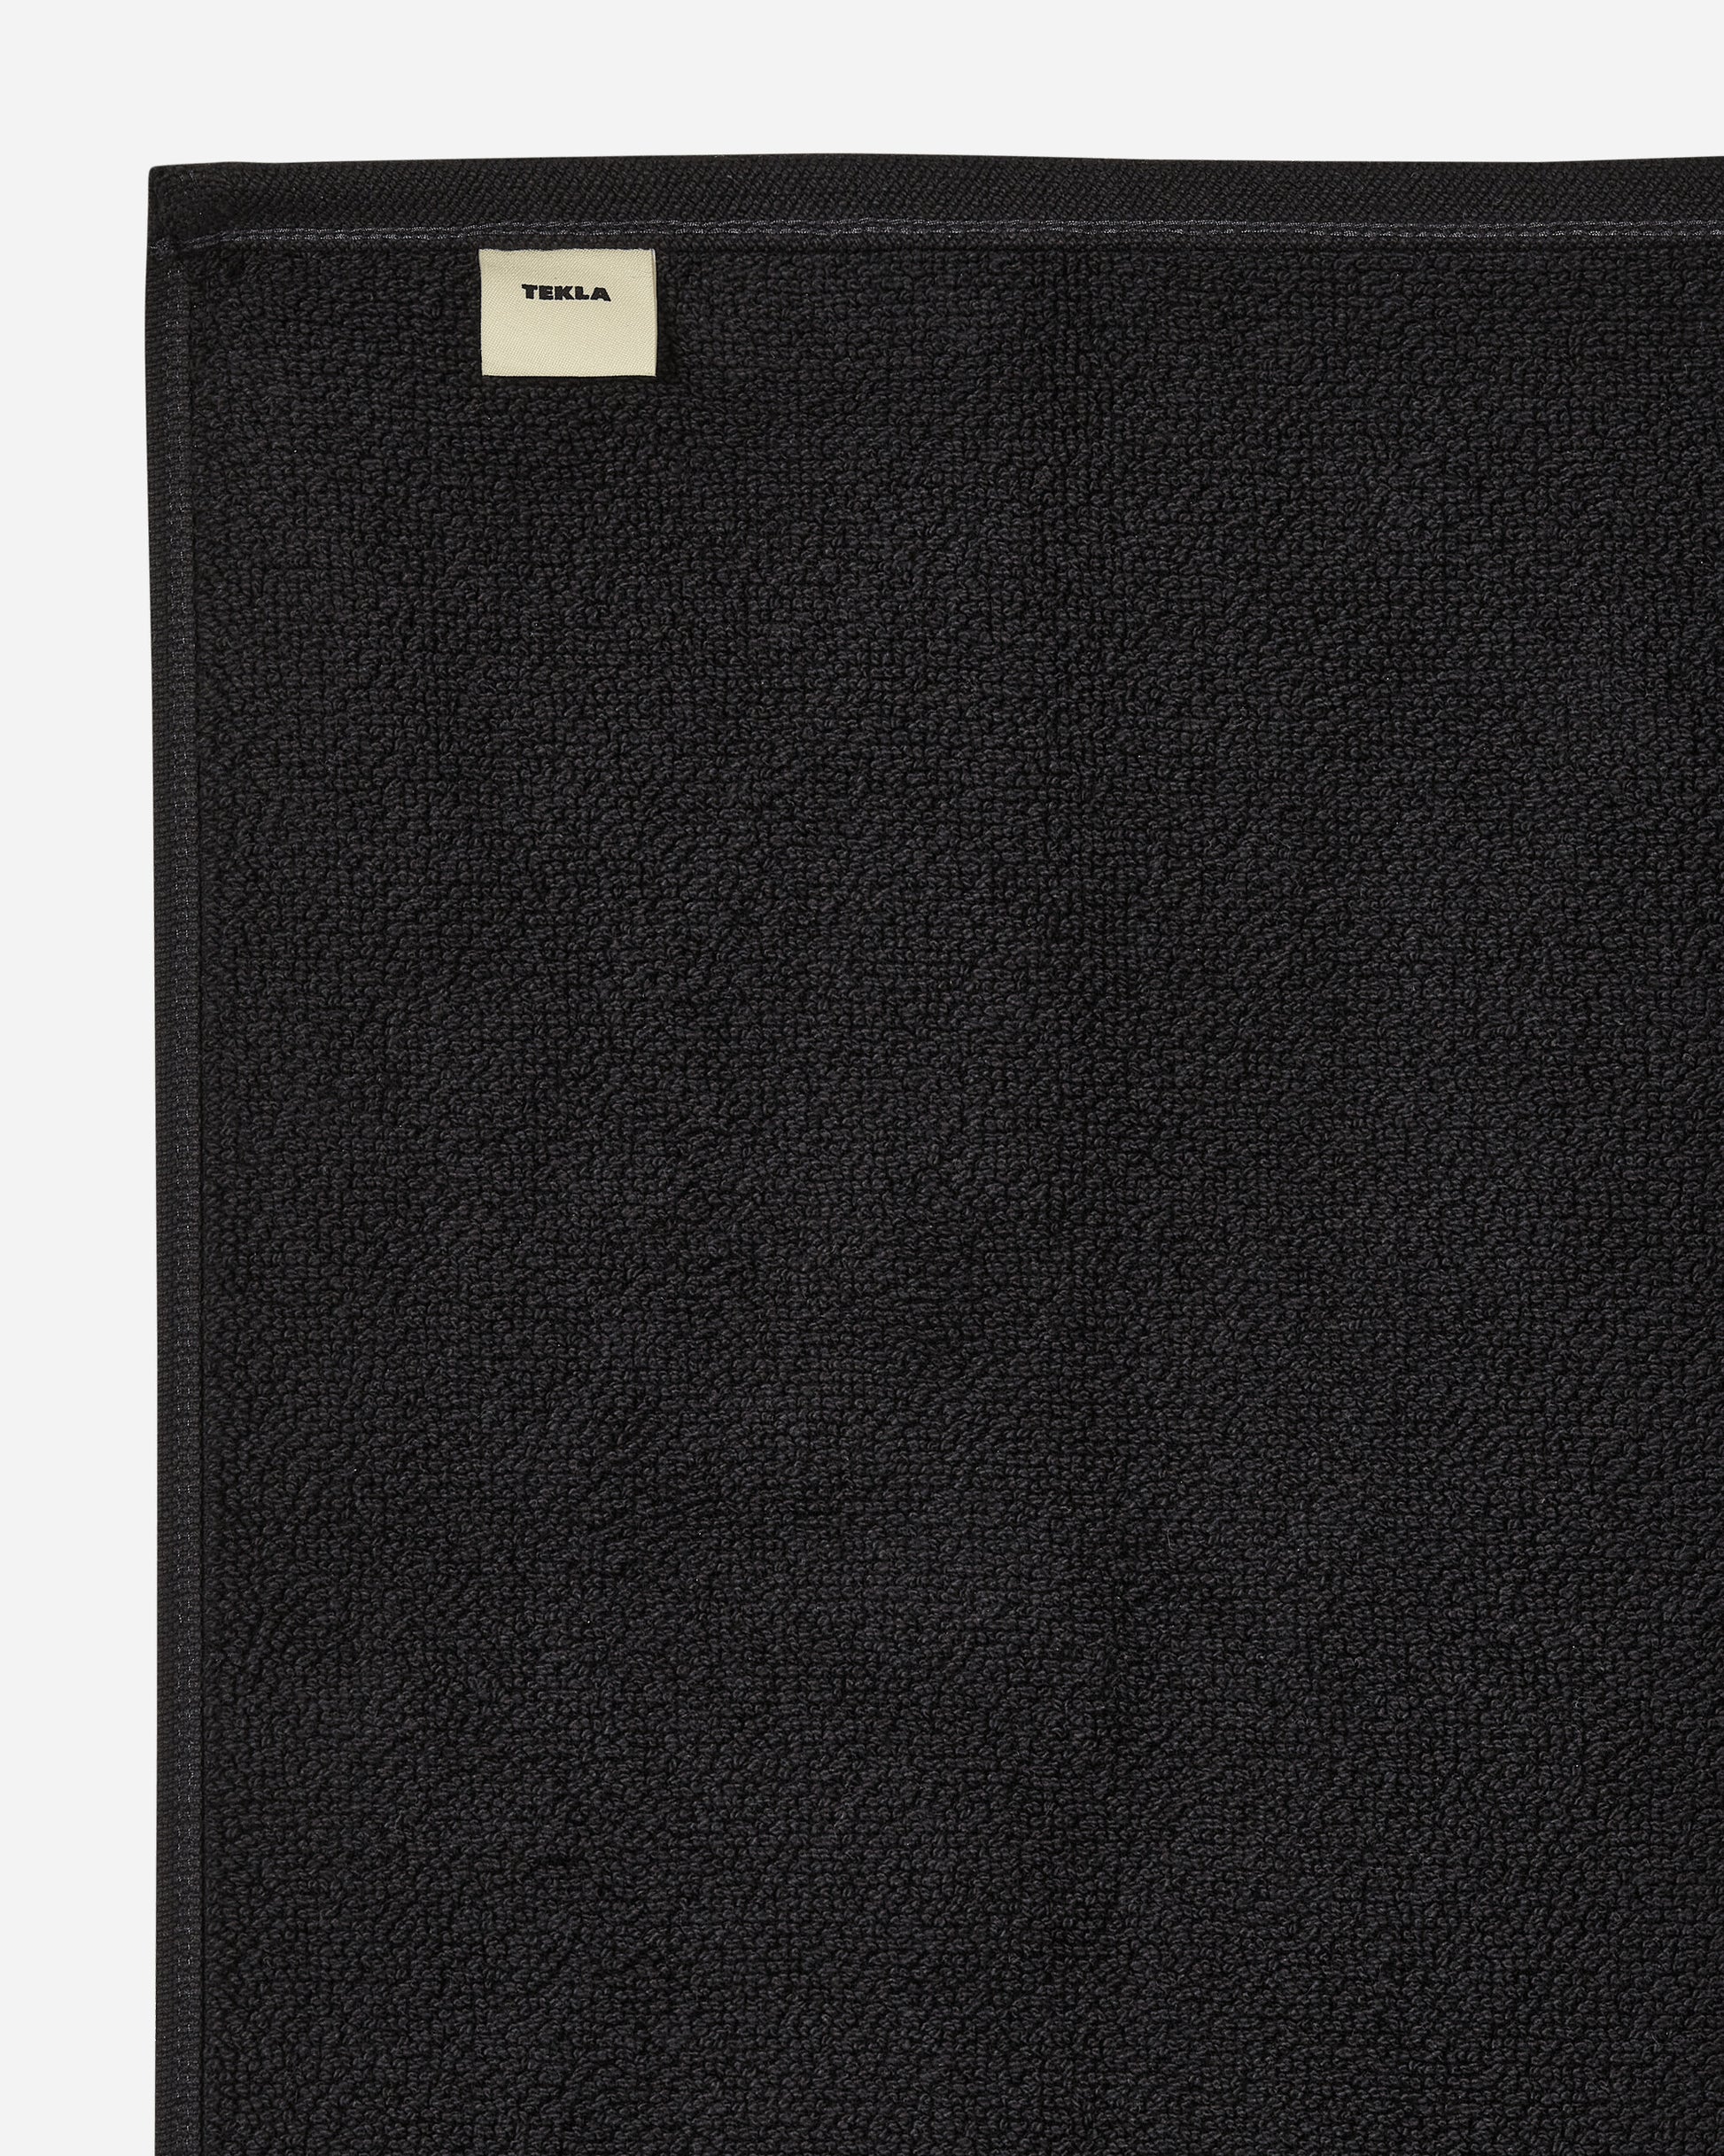 Tekla Bath Mat - Solid Black Textile Bath Towels BM-BL-70x50 BLST